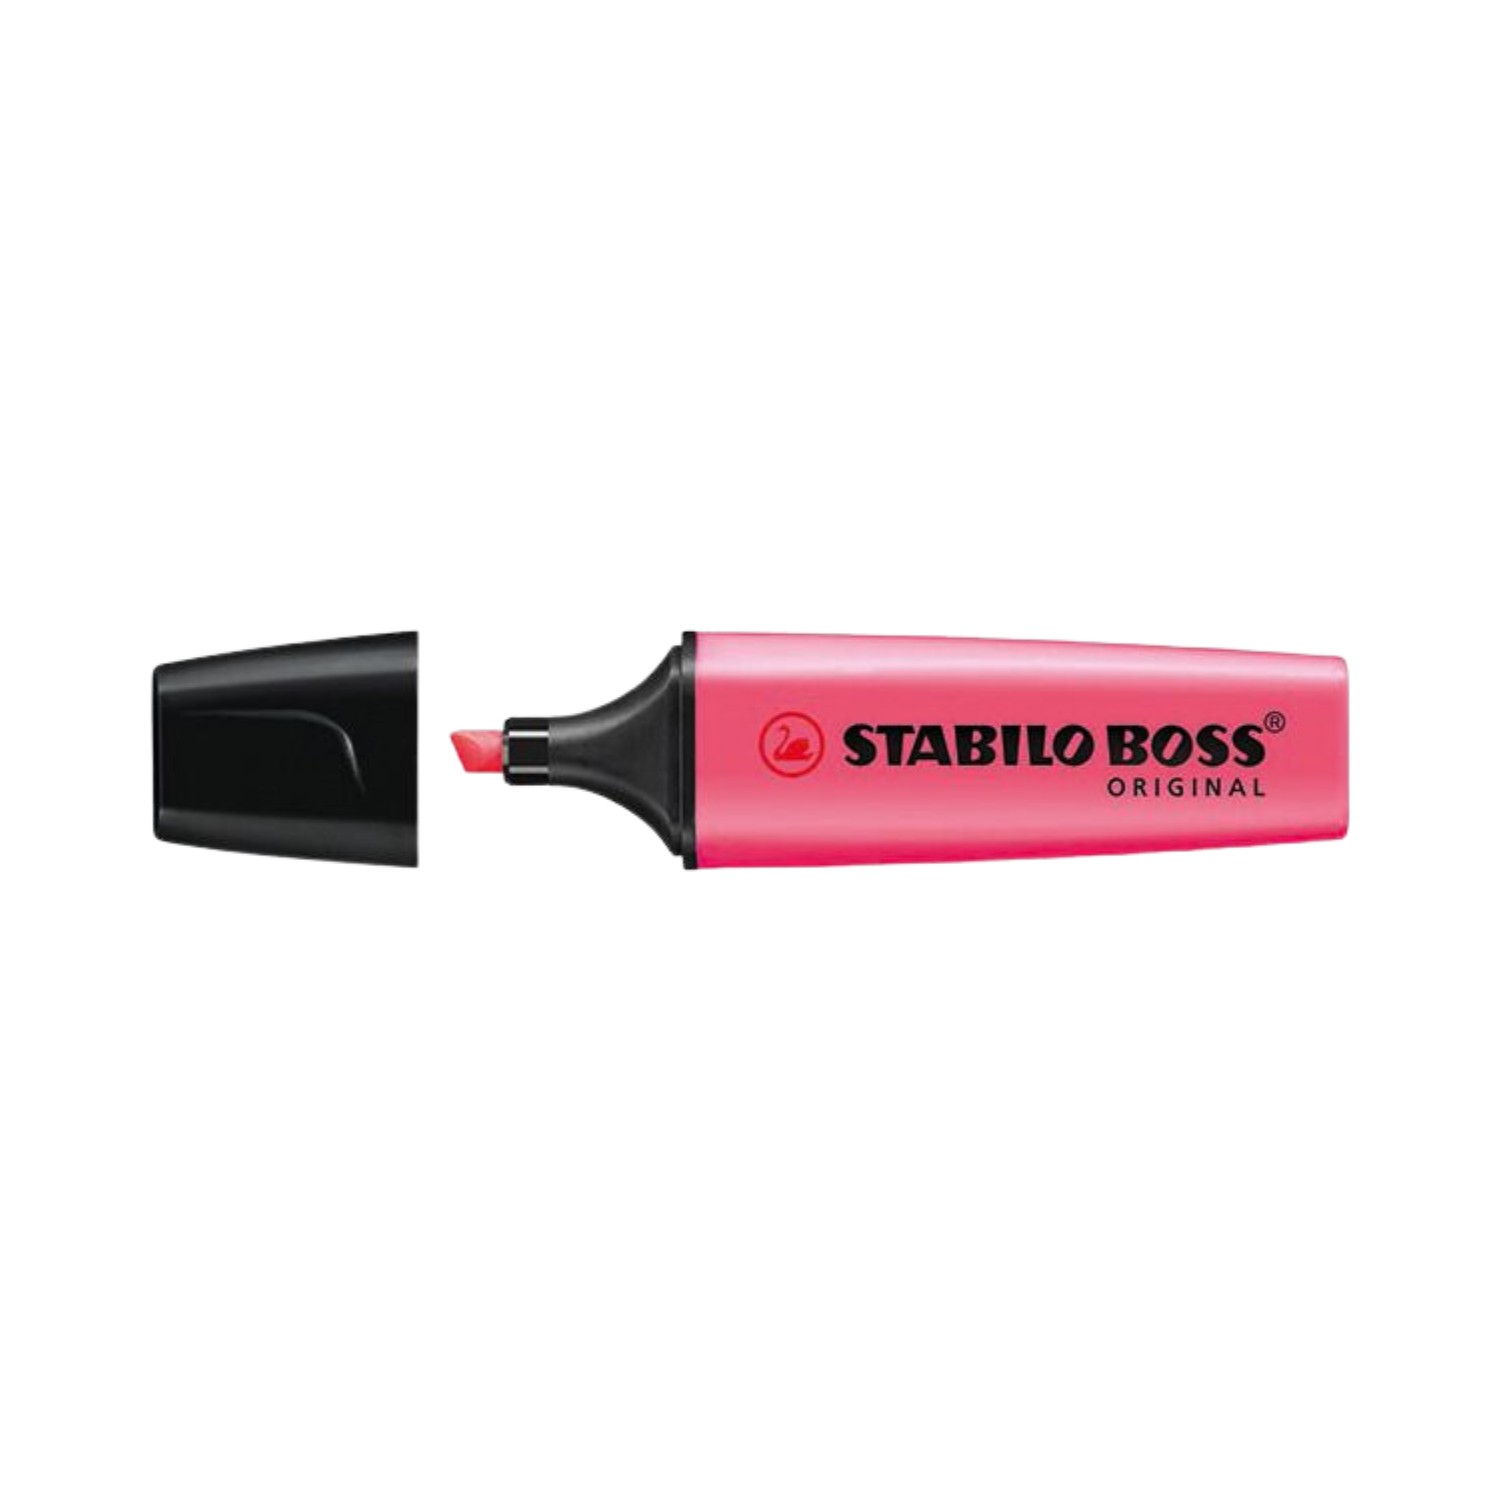 Stabilo+Boss+Original+Highlighter+Pink